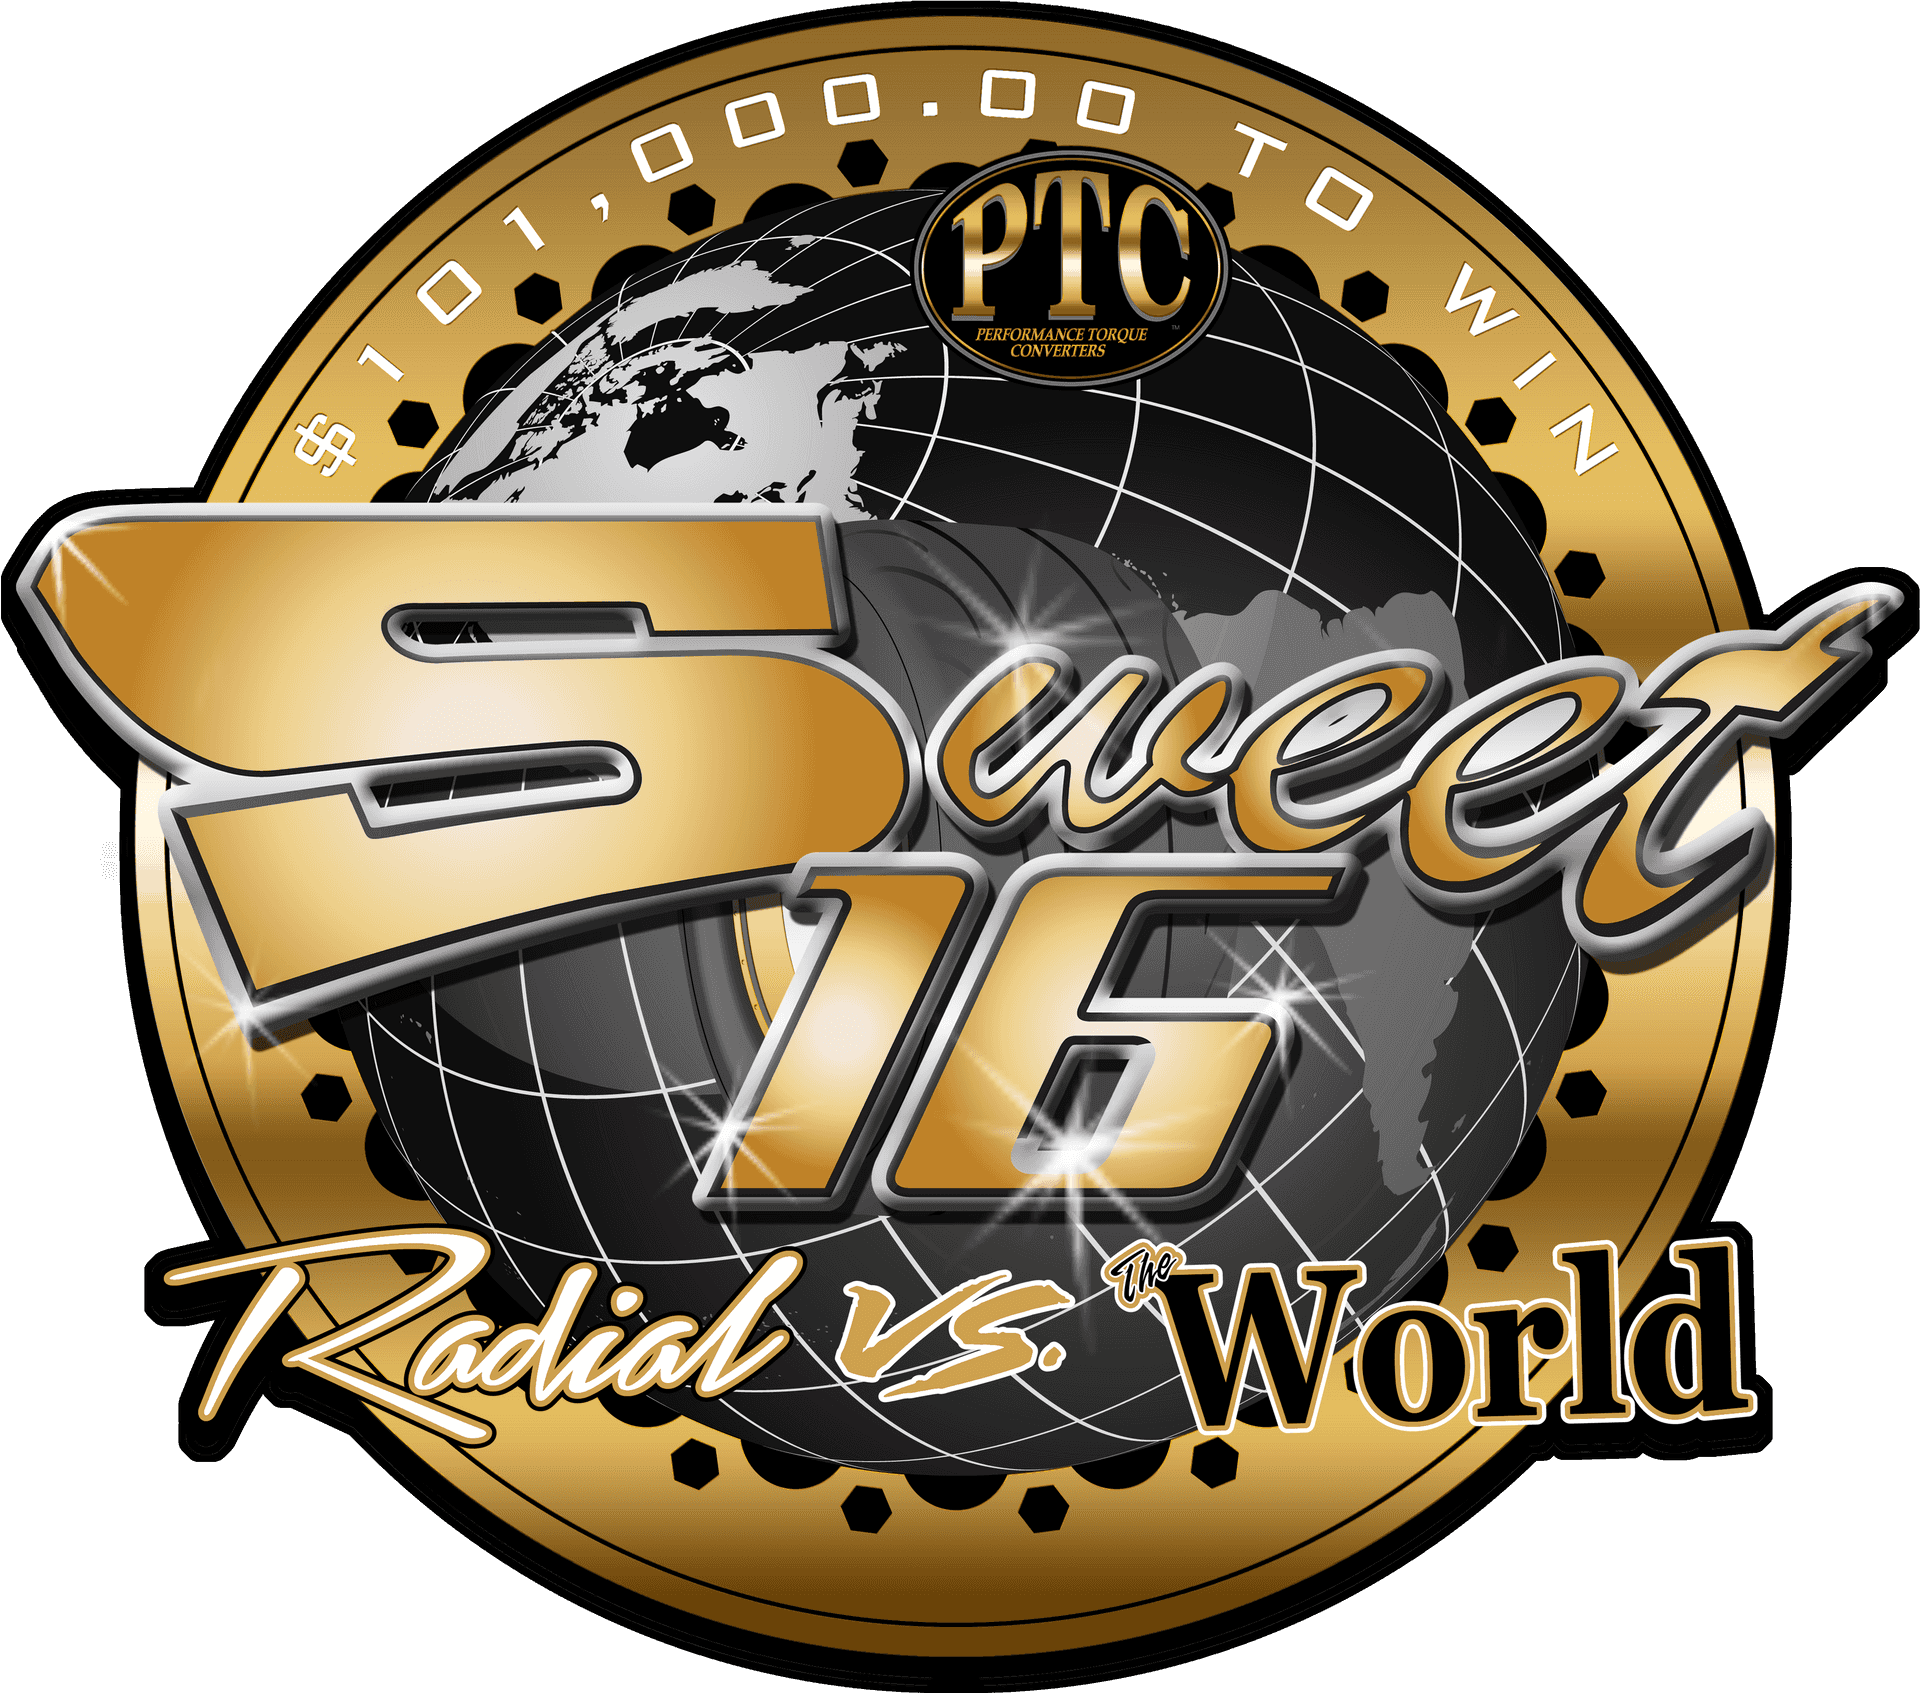 Download Sweet16 Radial Vs World Logo